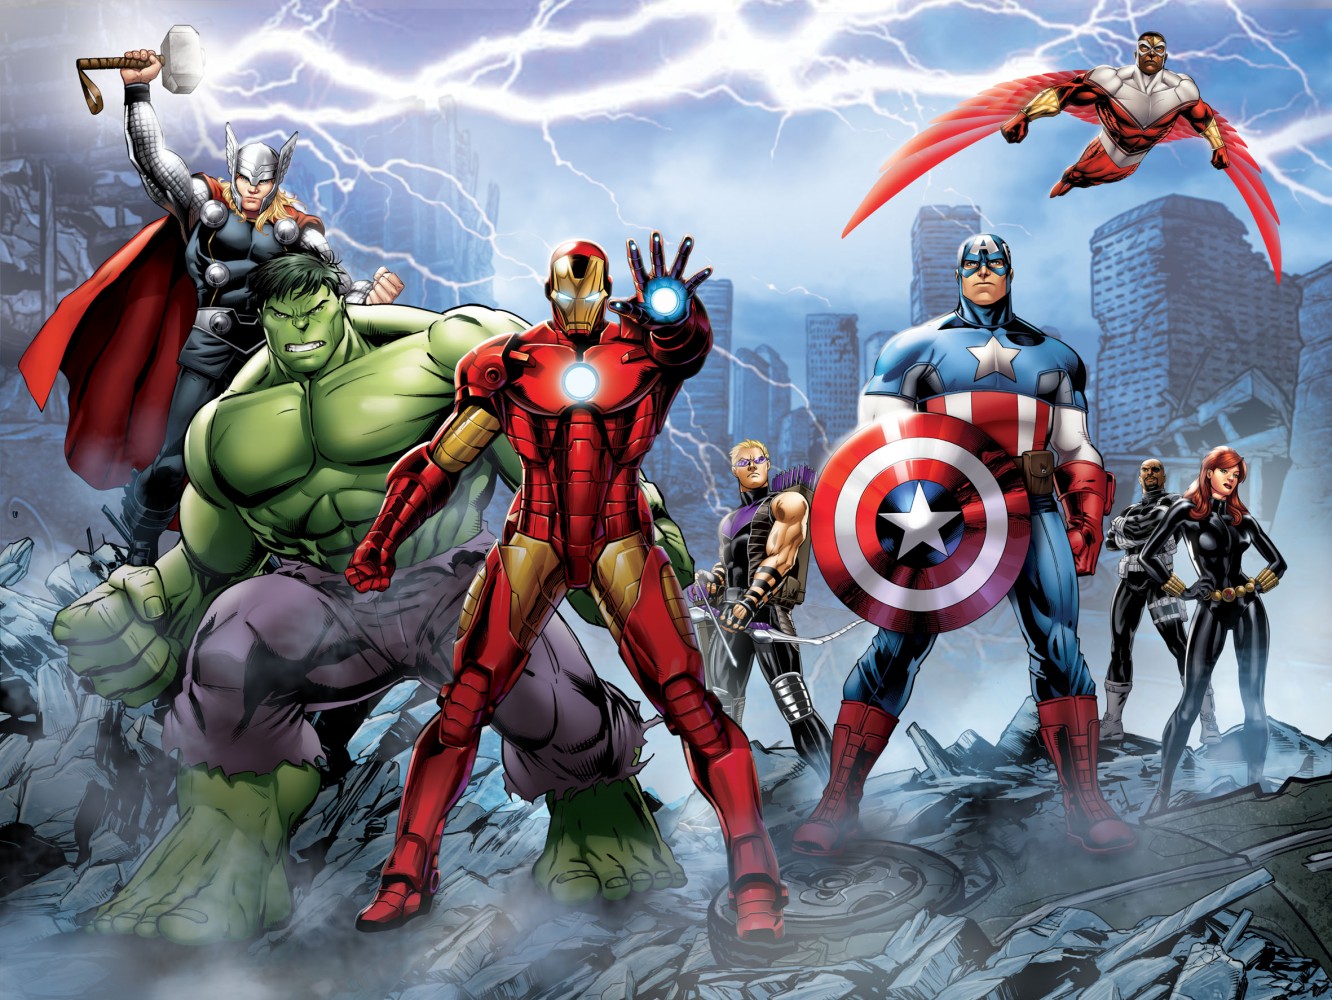 Wall mural wallpaper Marvel The Avengers Iron Man Hulk Thor photo 360 ...